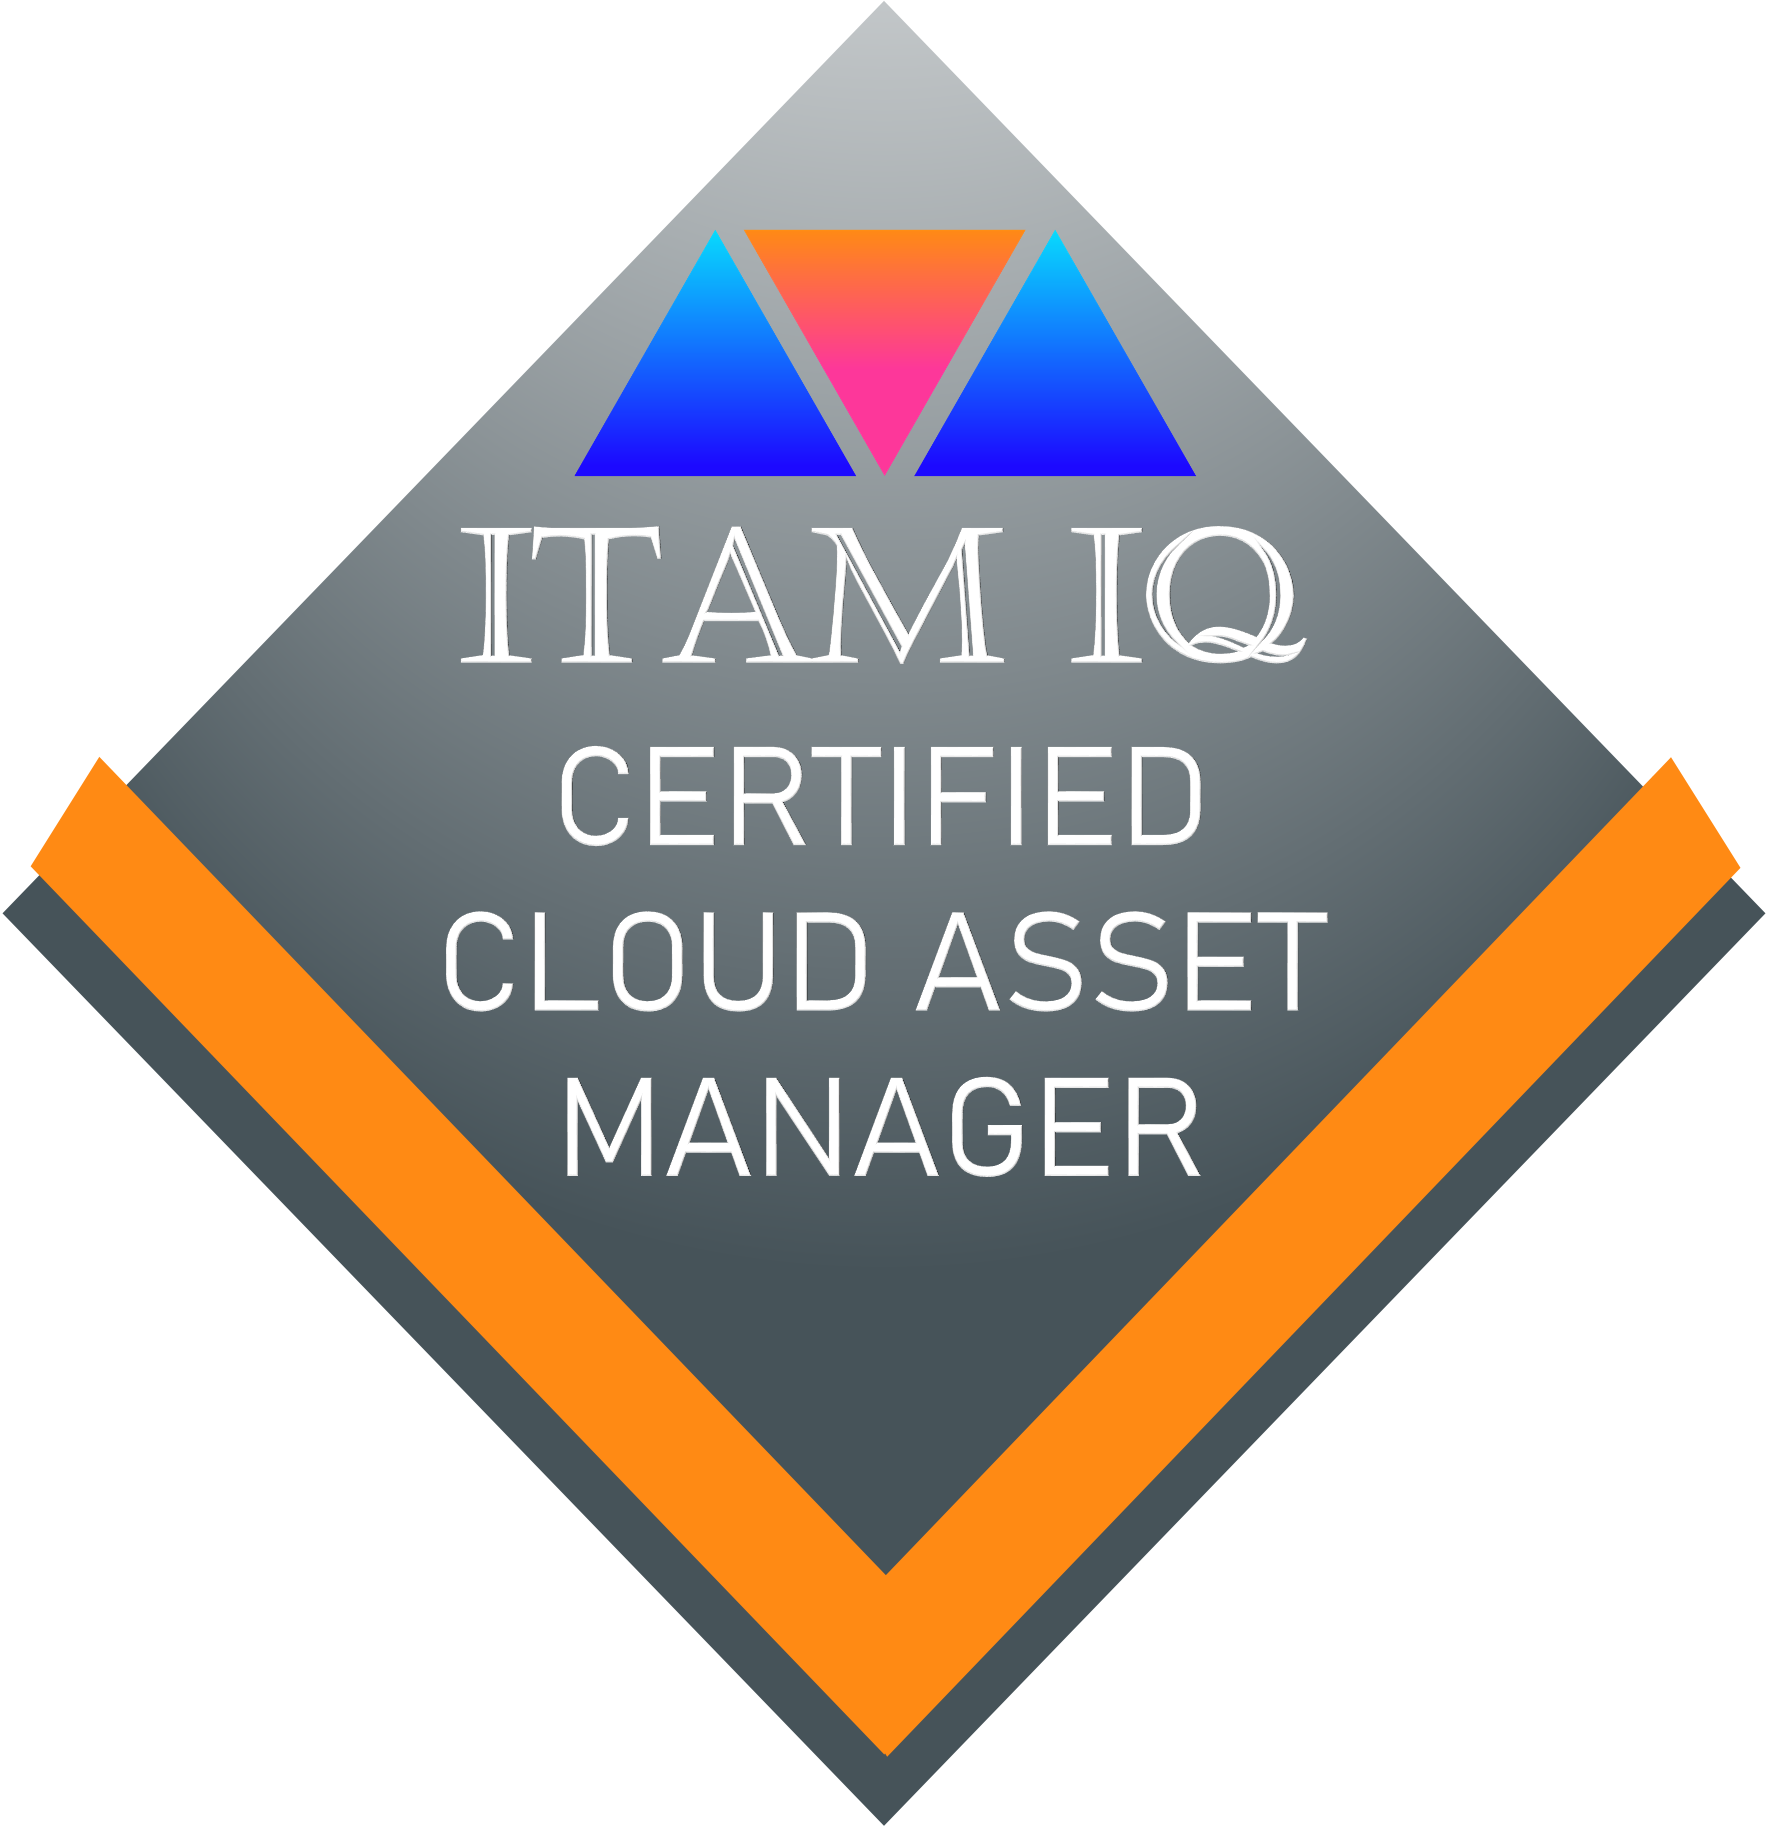 The Definitive Guide to Cloud Asset Management, Certified Cloud Asset Manager, IT Asset Management Training Course, ITAM Cloud